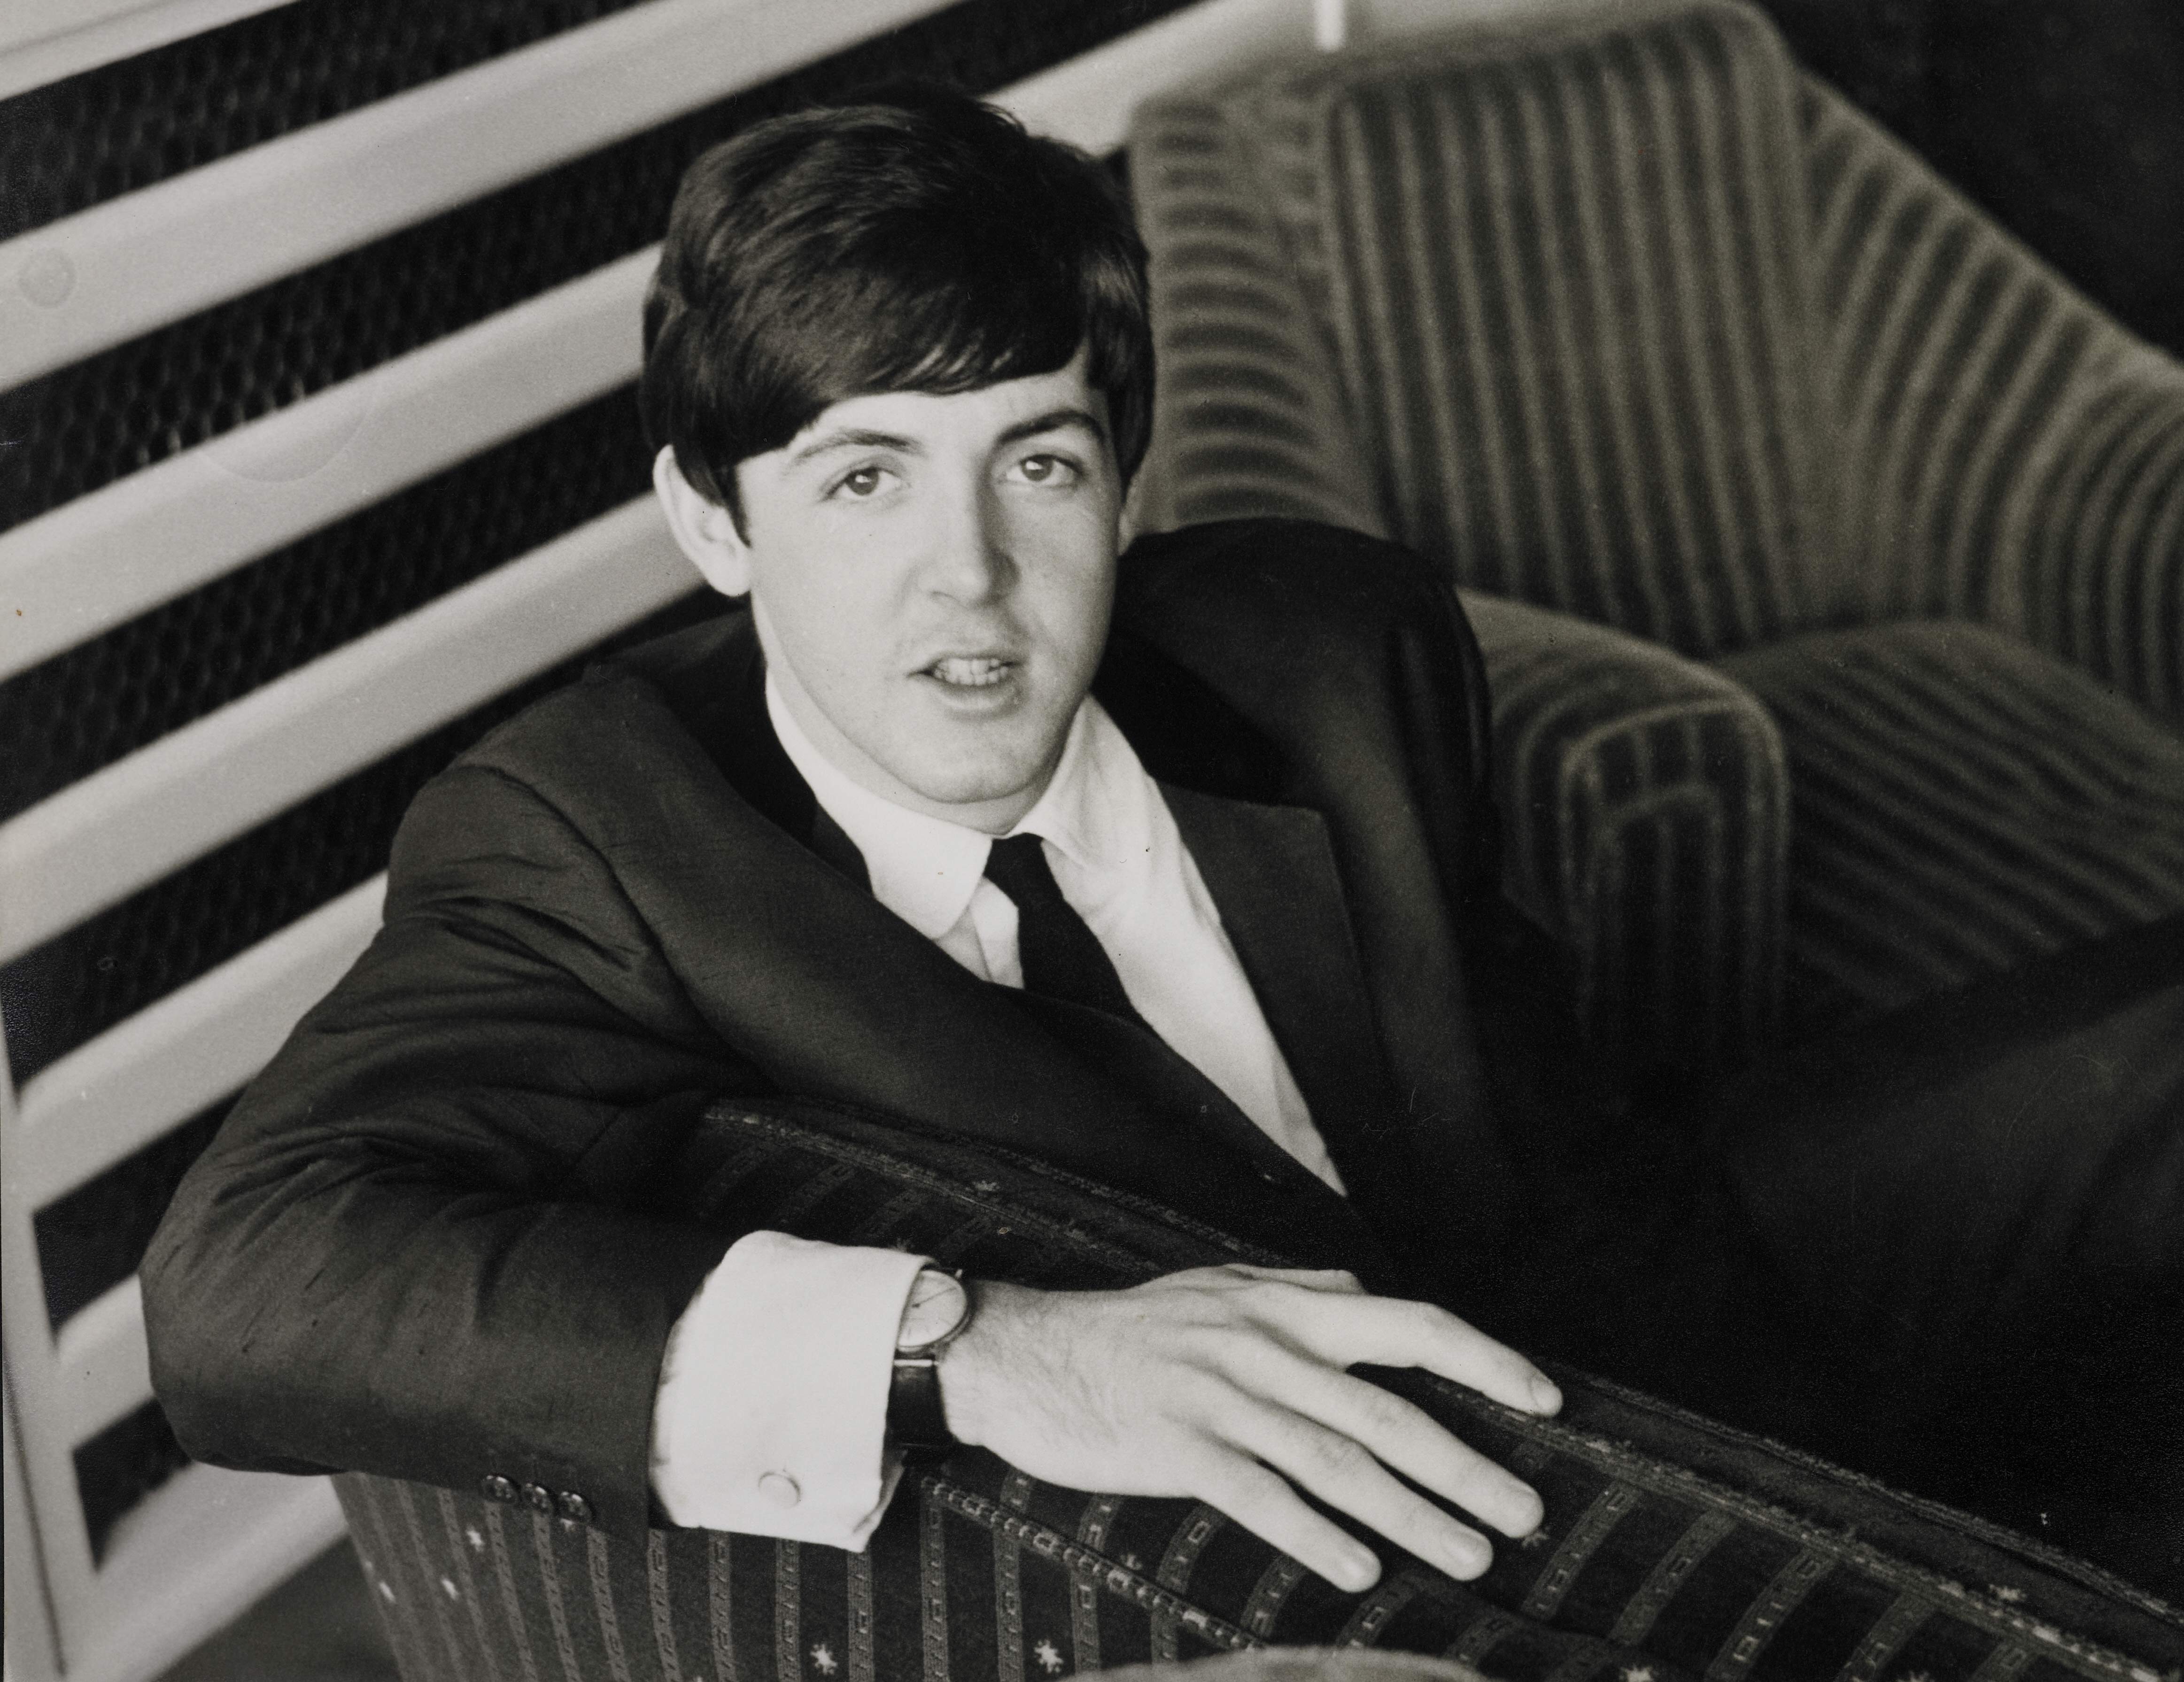 The Beatles' Paul McCartney sitting during the 'White Album' era